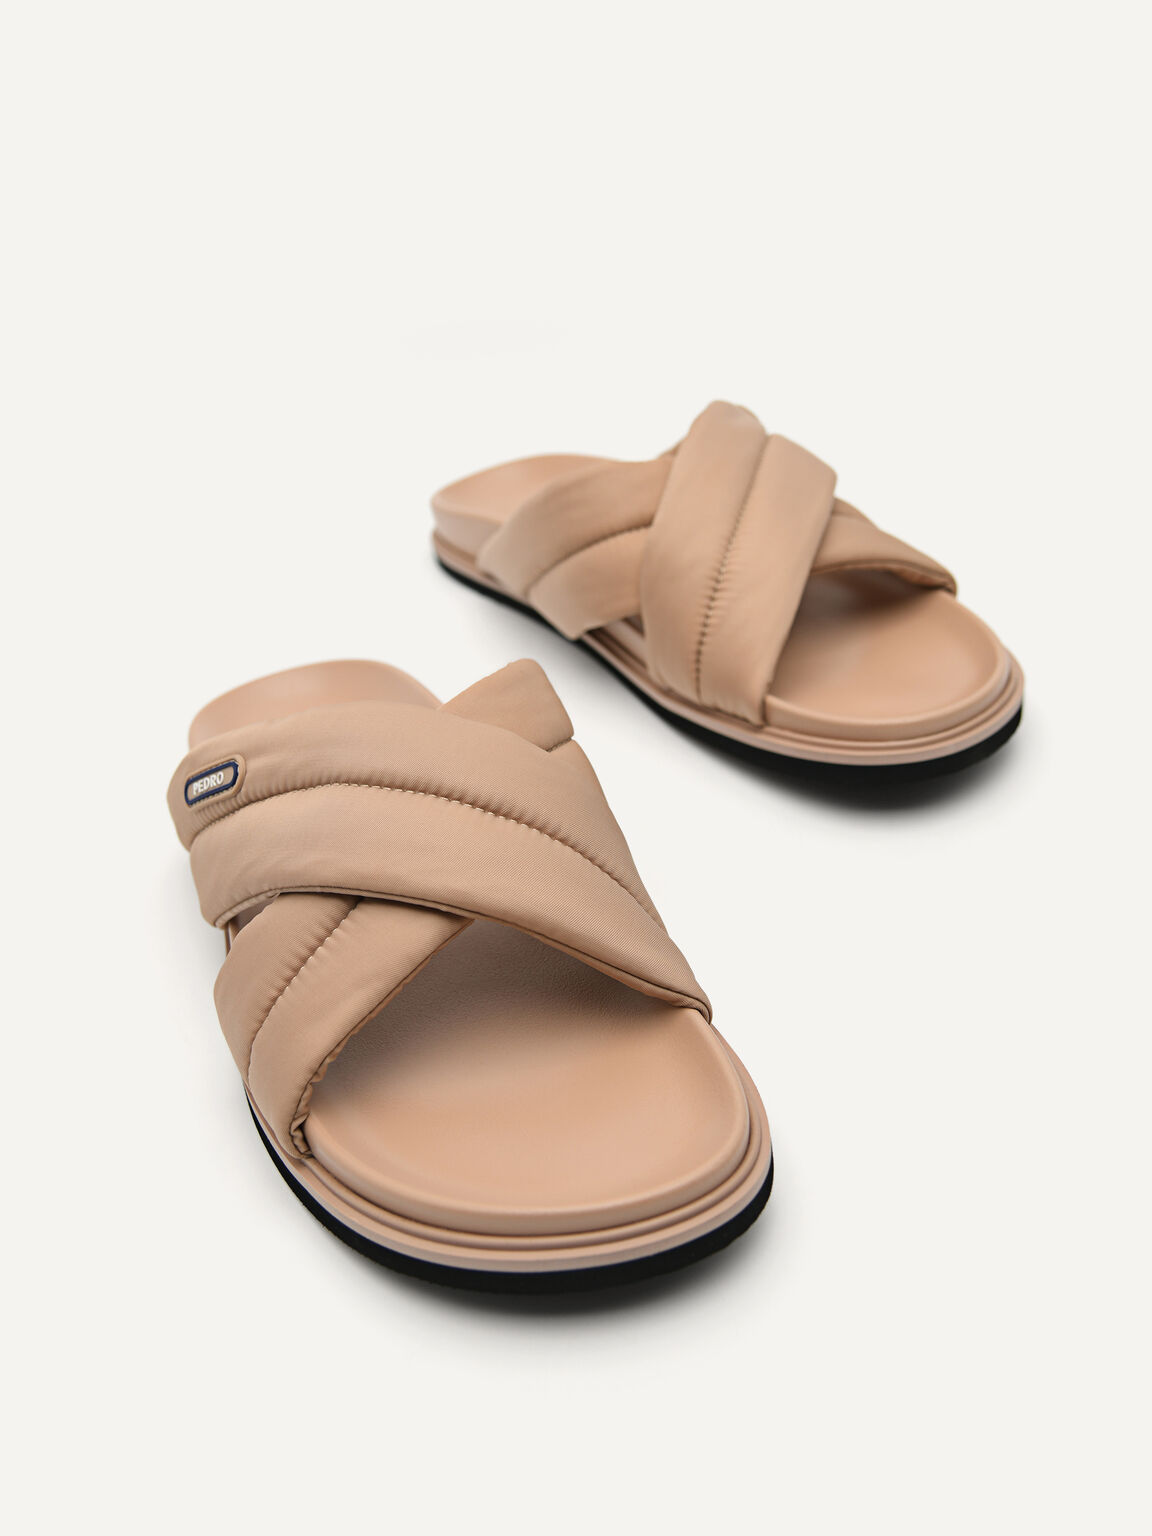 Nylon Puffy Cross-strap Sandals, Sand